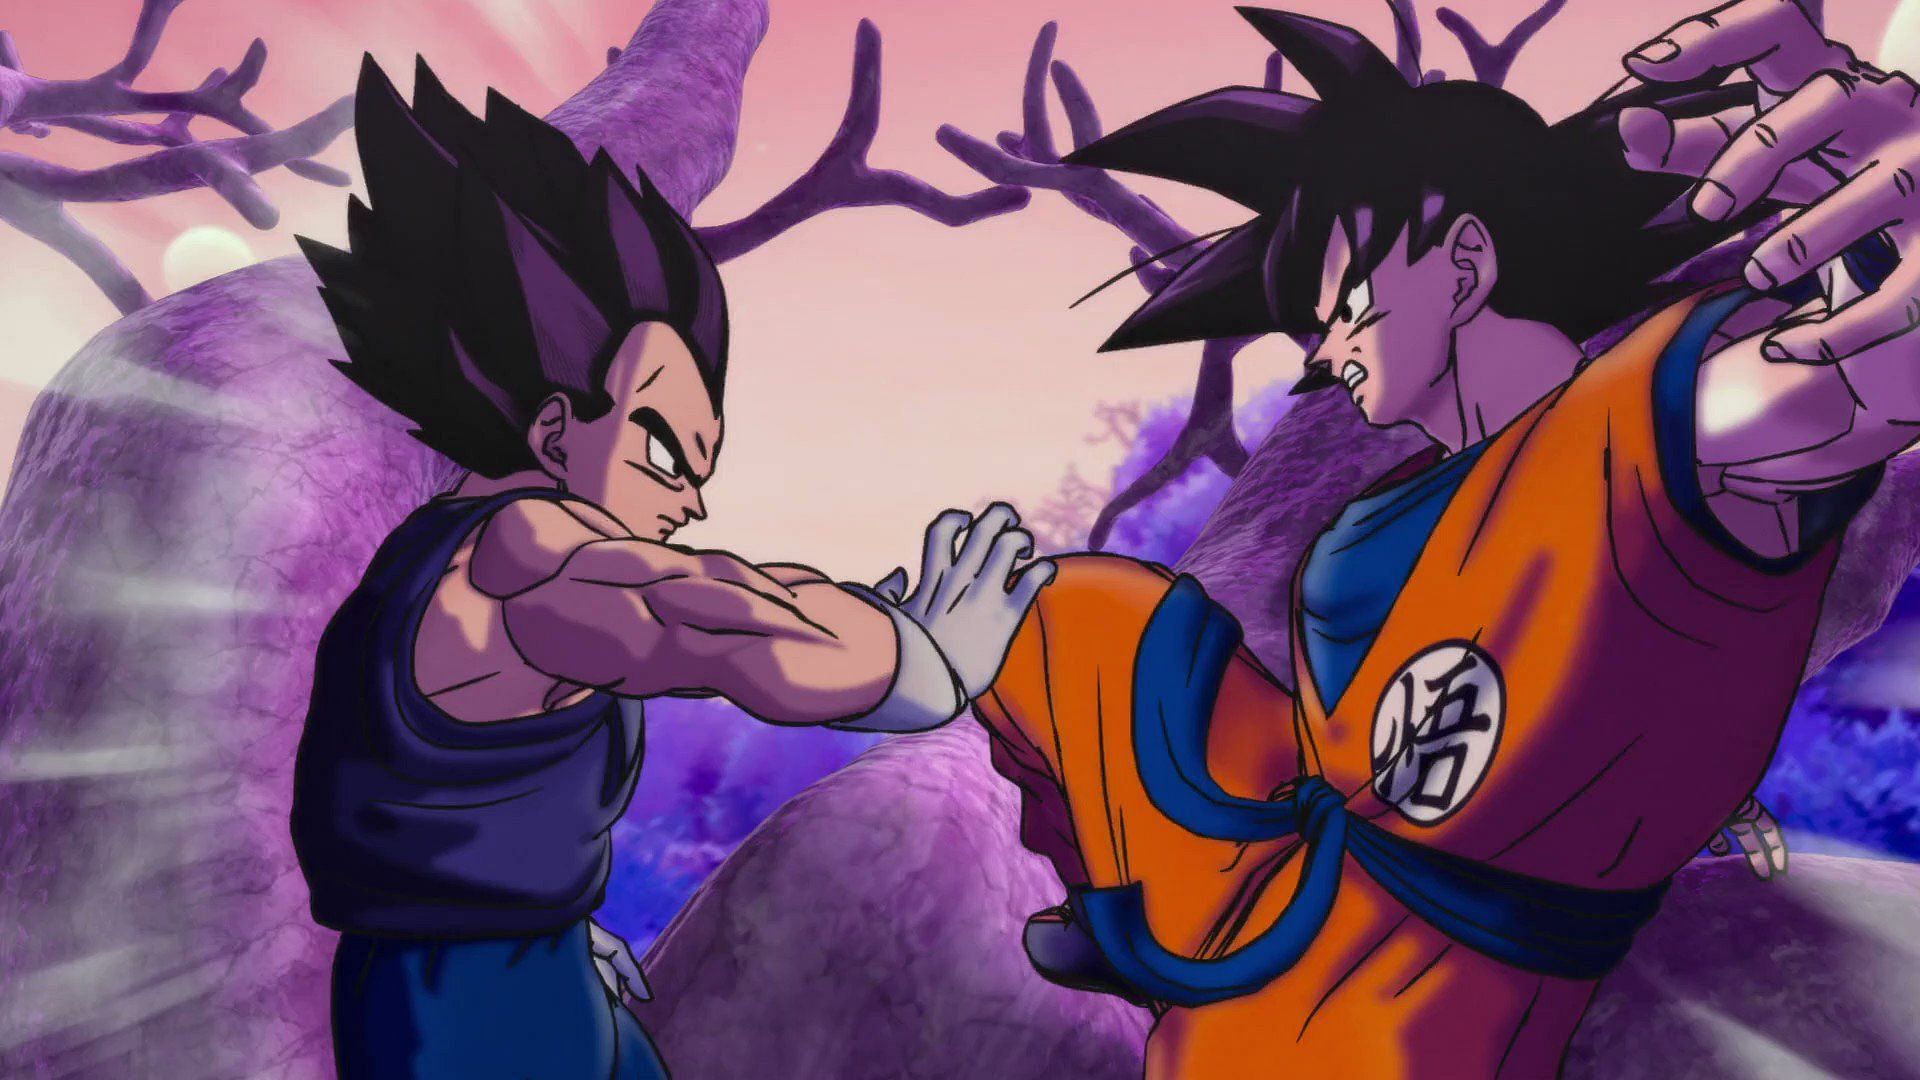 Dragon Ball Super chapter 88 spoiler reveals Goku & Vegeta's next big move